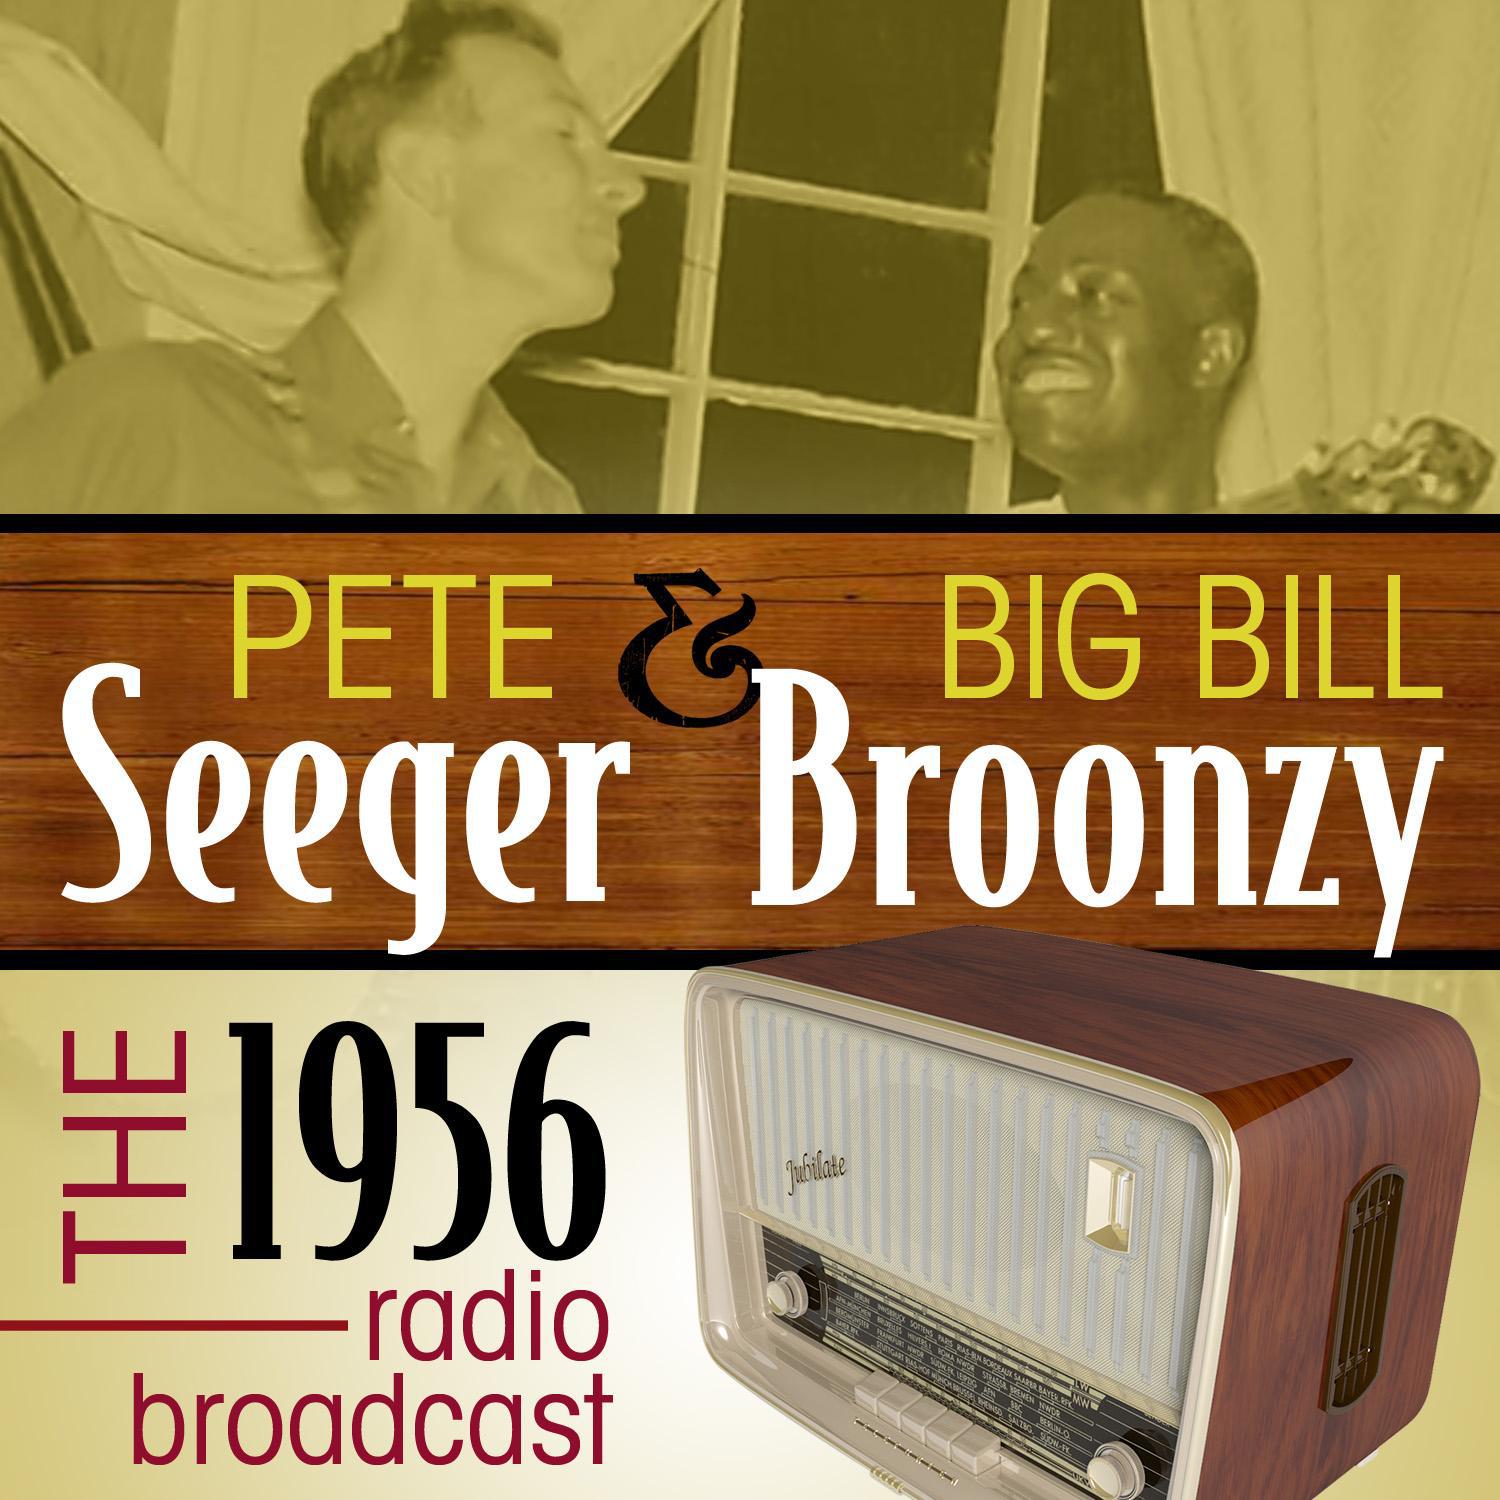 The 1956 Radio Broadcast